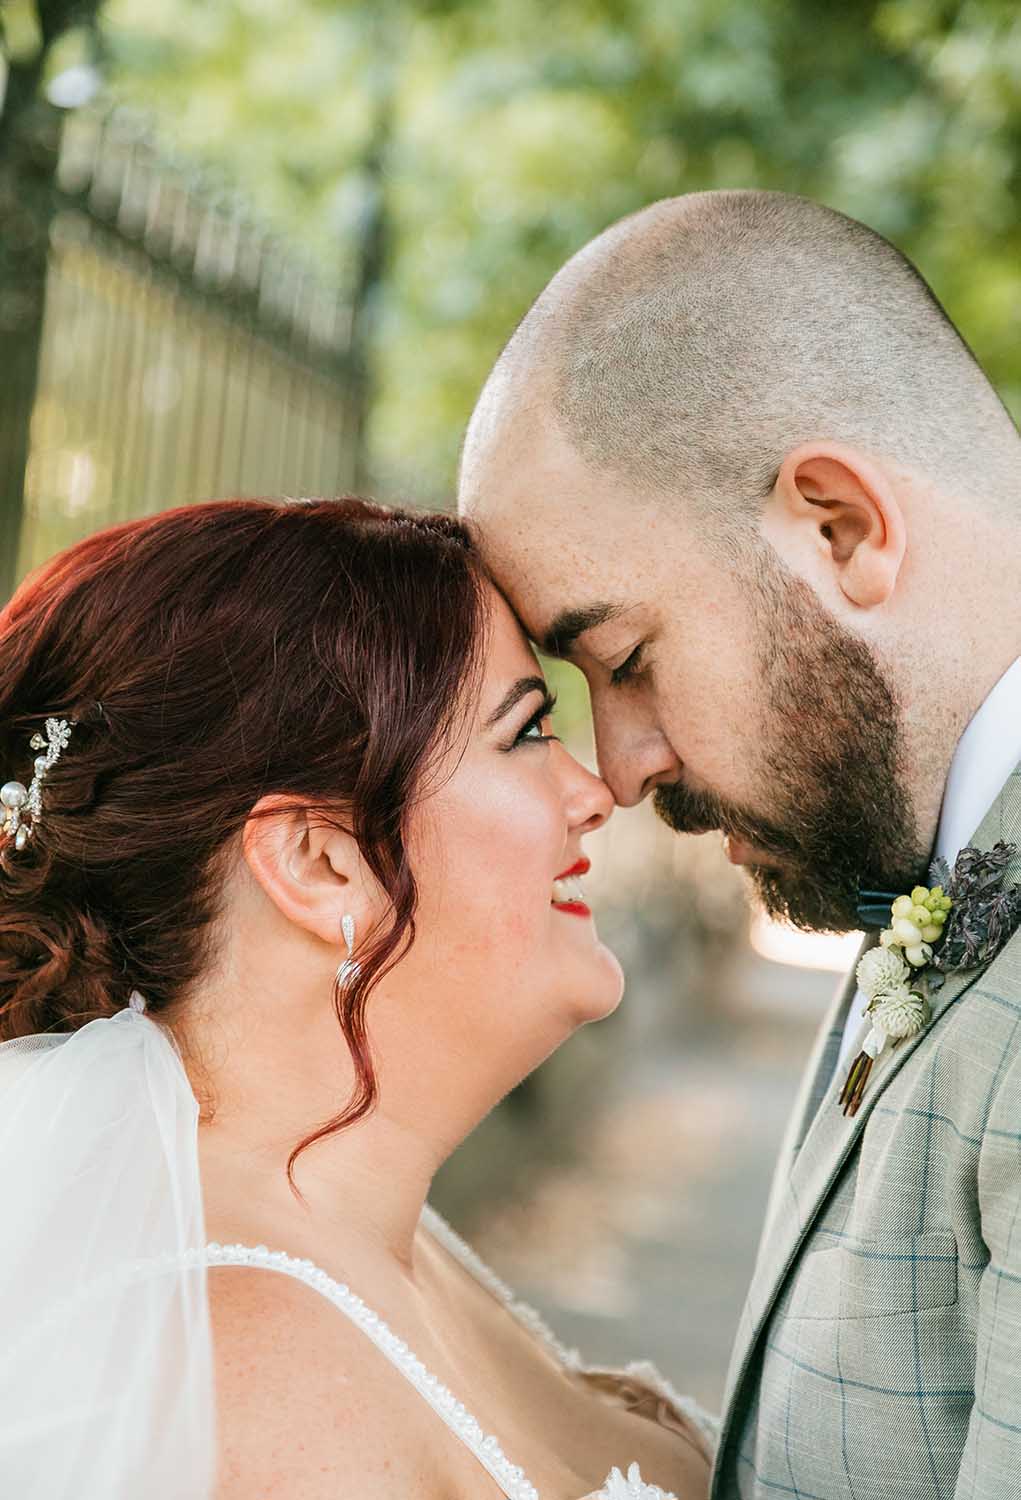 Destination Wedding Photography - Bride and Groom Embrace